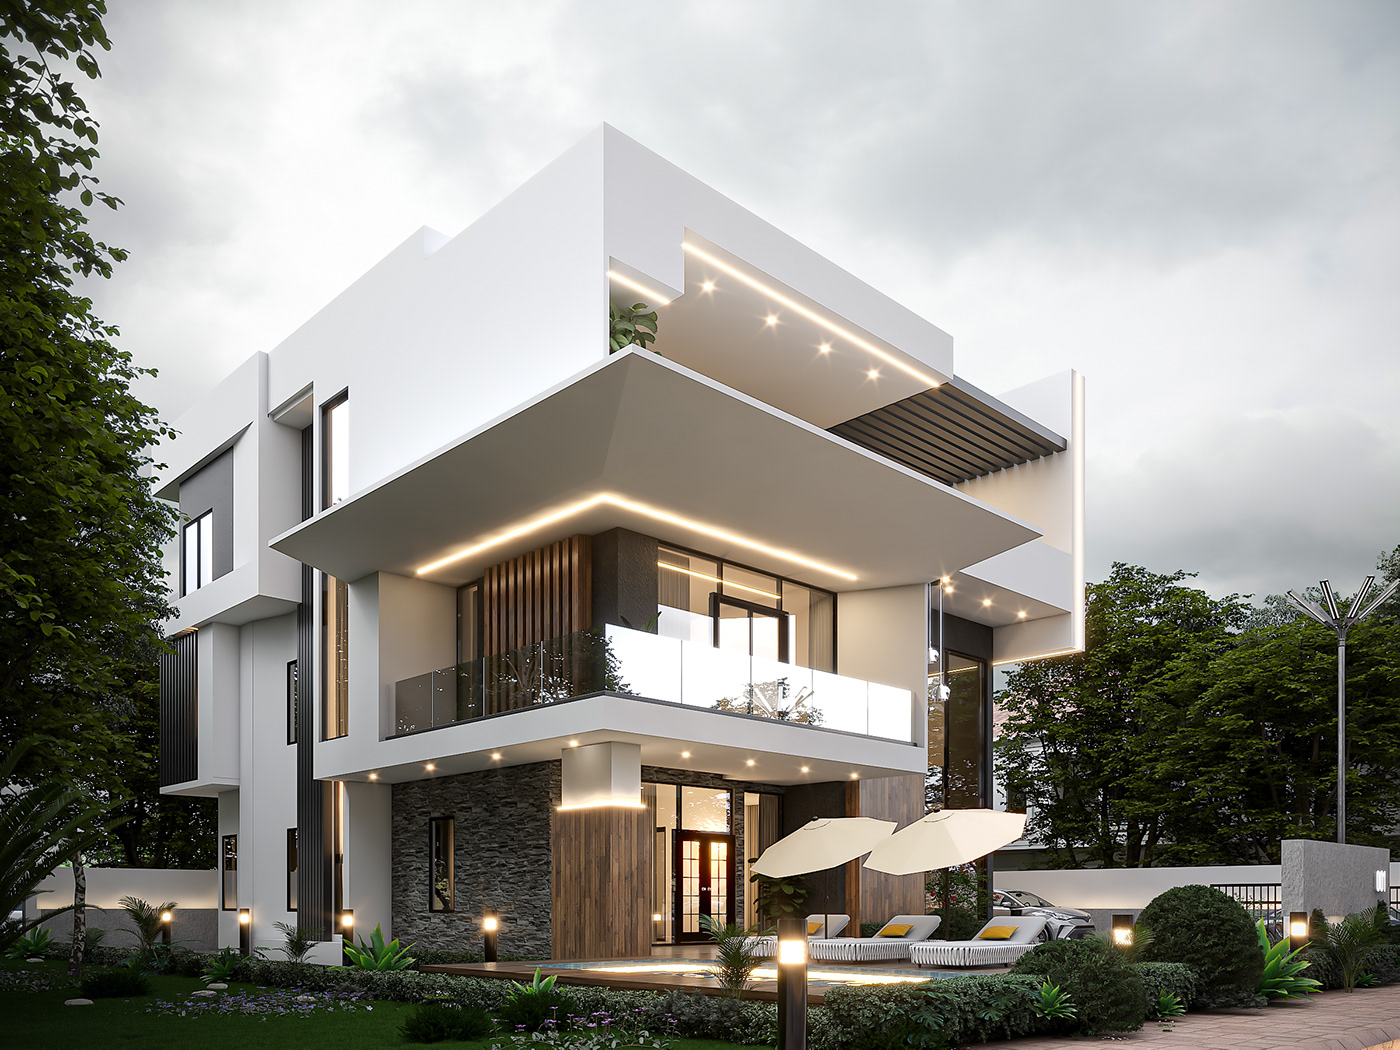 architecture visualization modern vray exterior ivory coast duplex homedesign 5bedroom villa luxuryhome